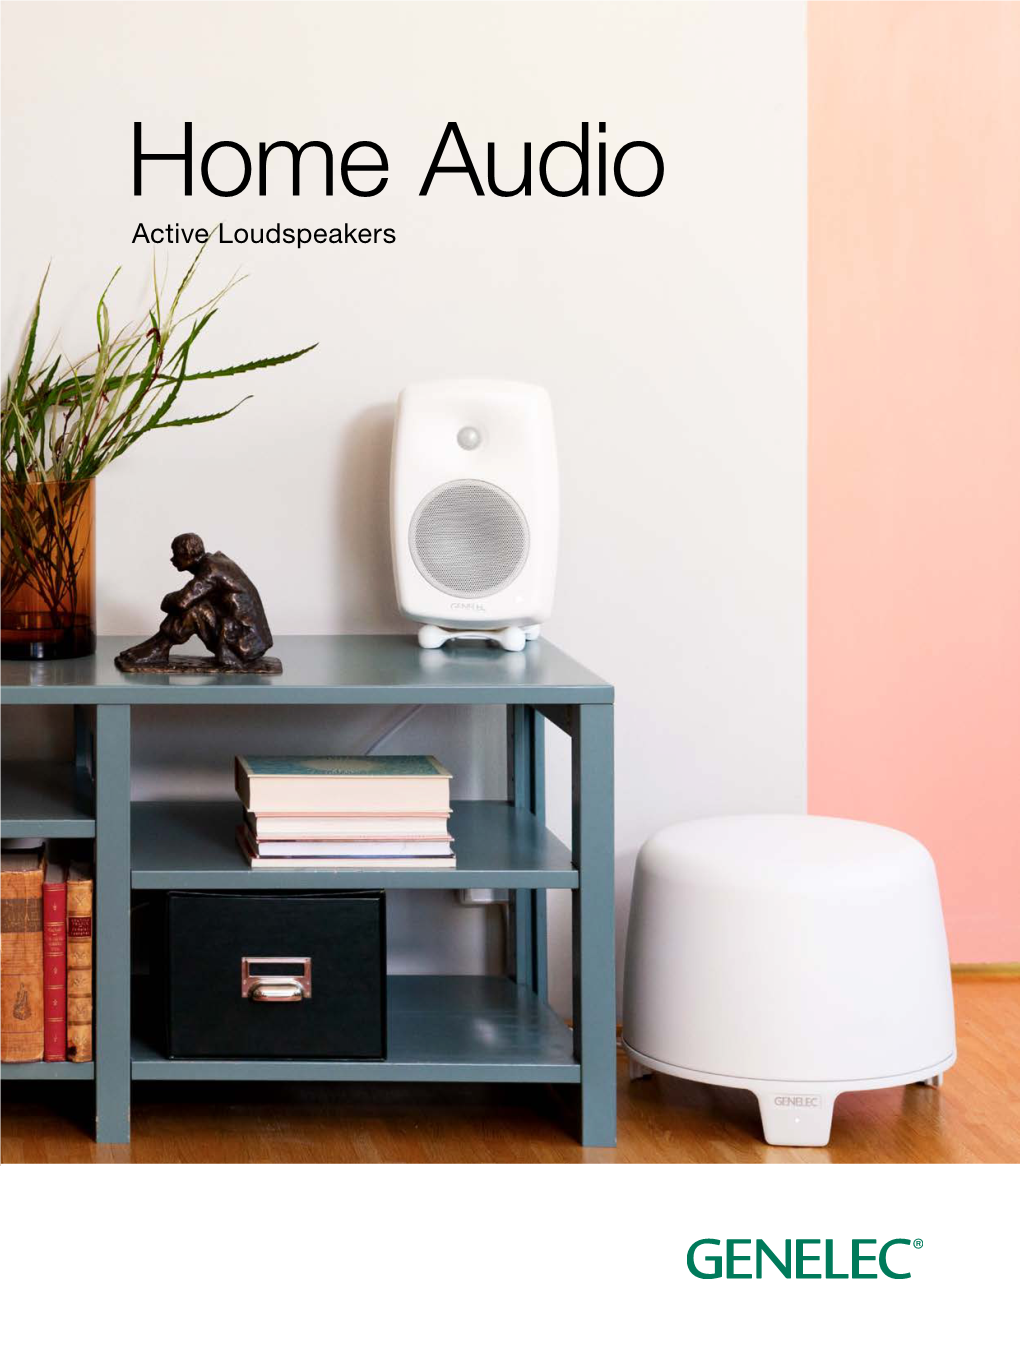 Home Audio Full Line Catalogue